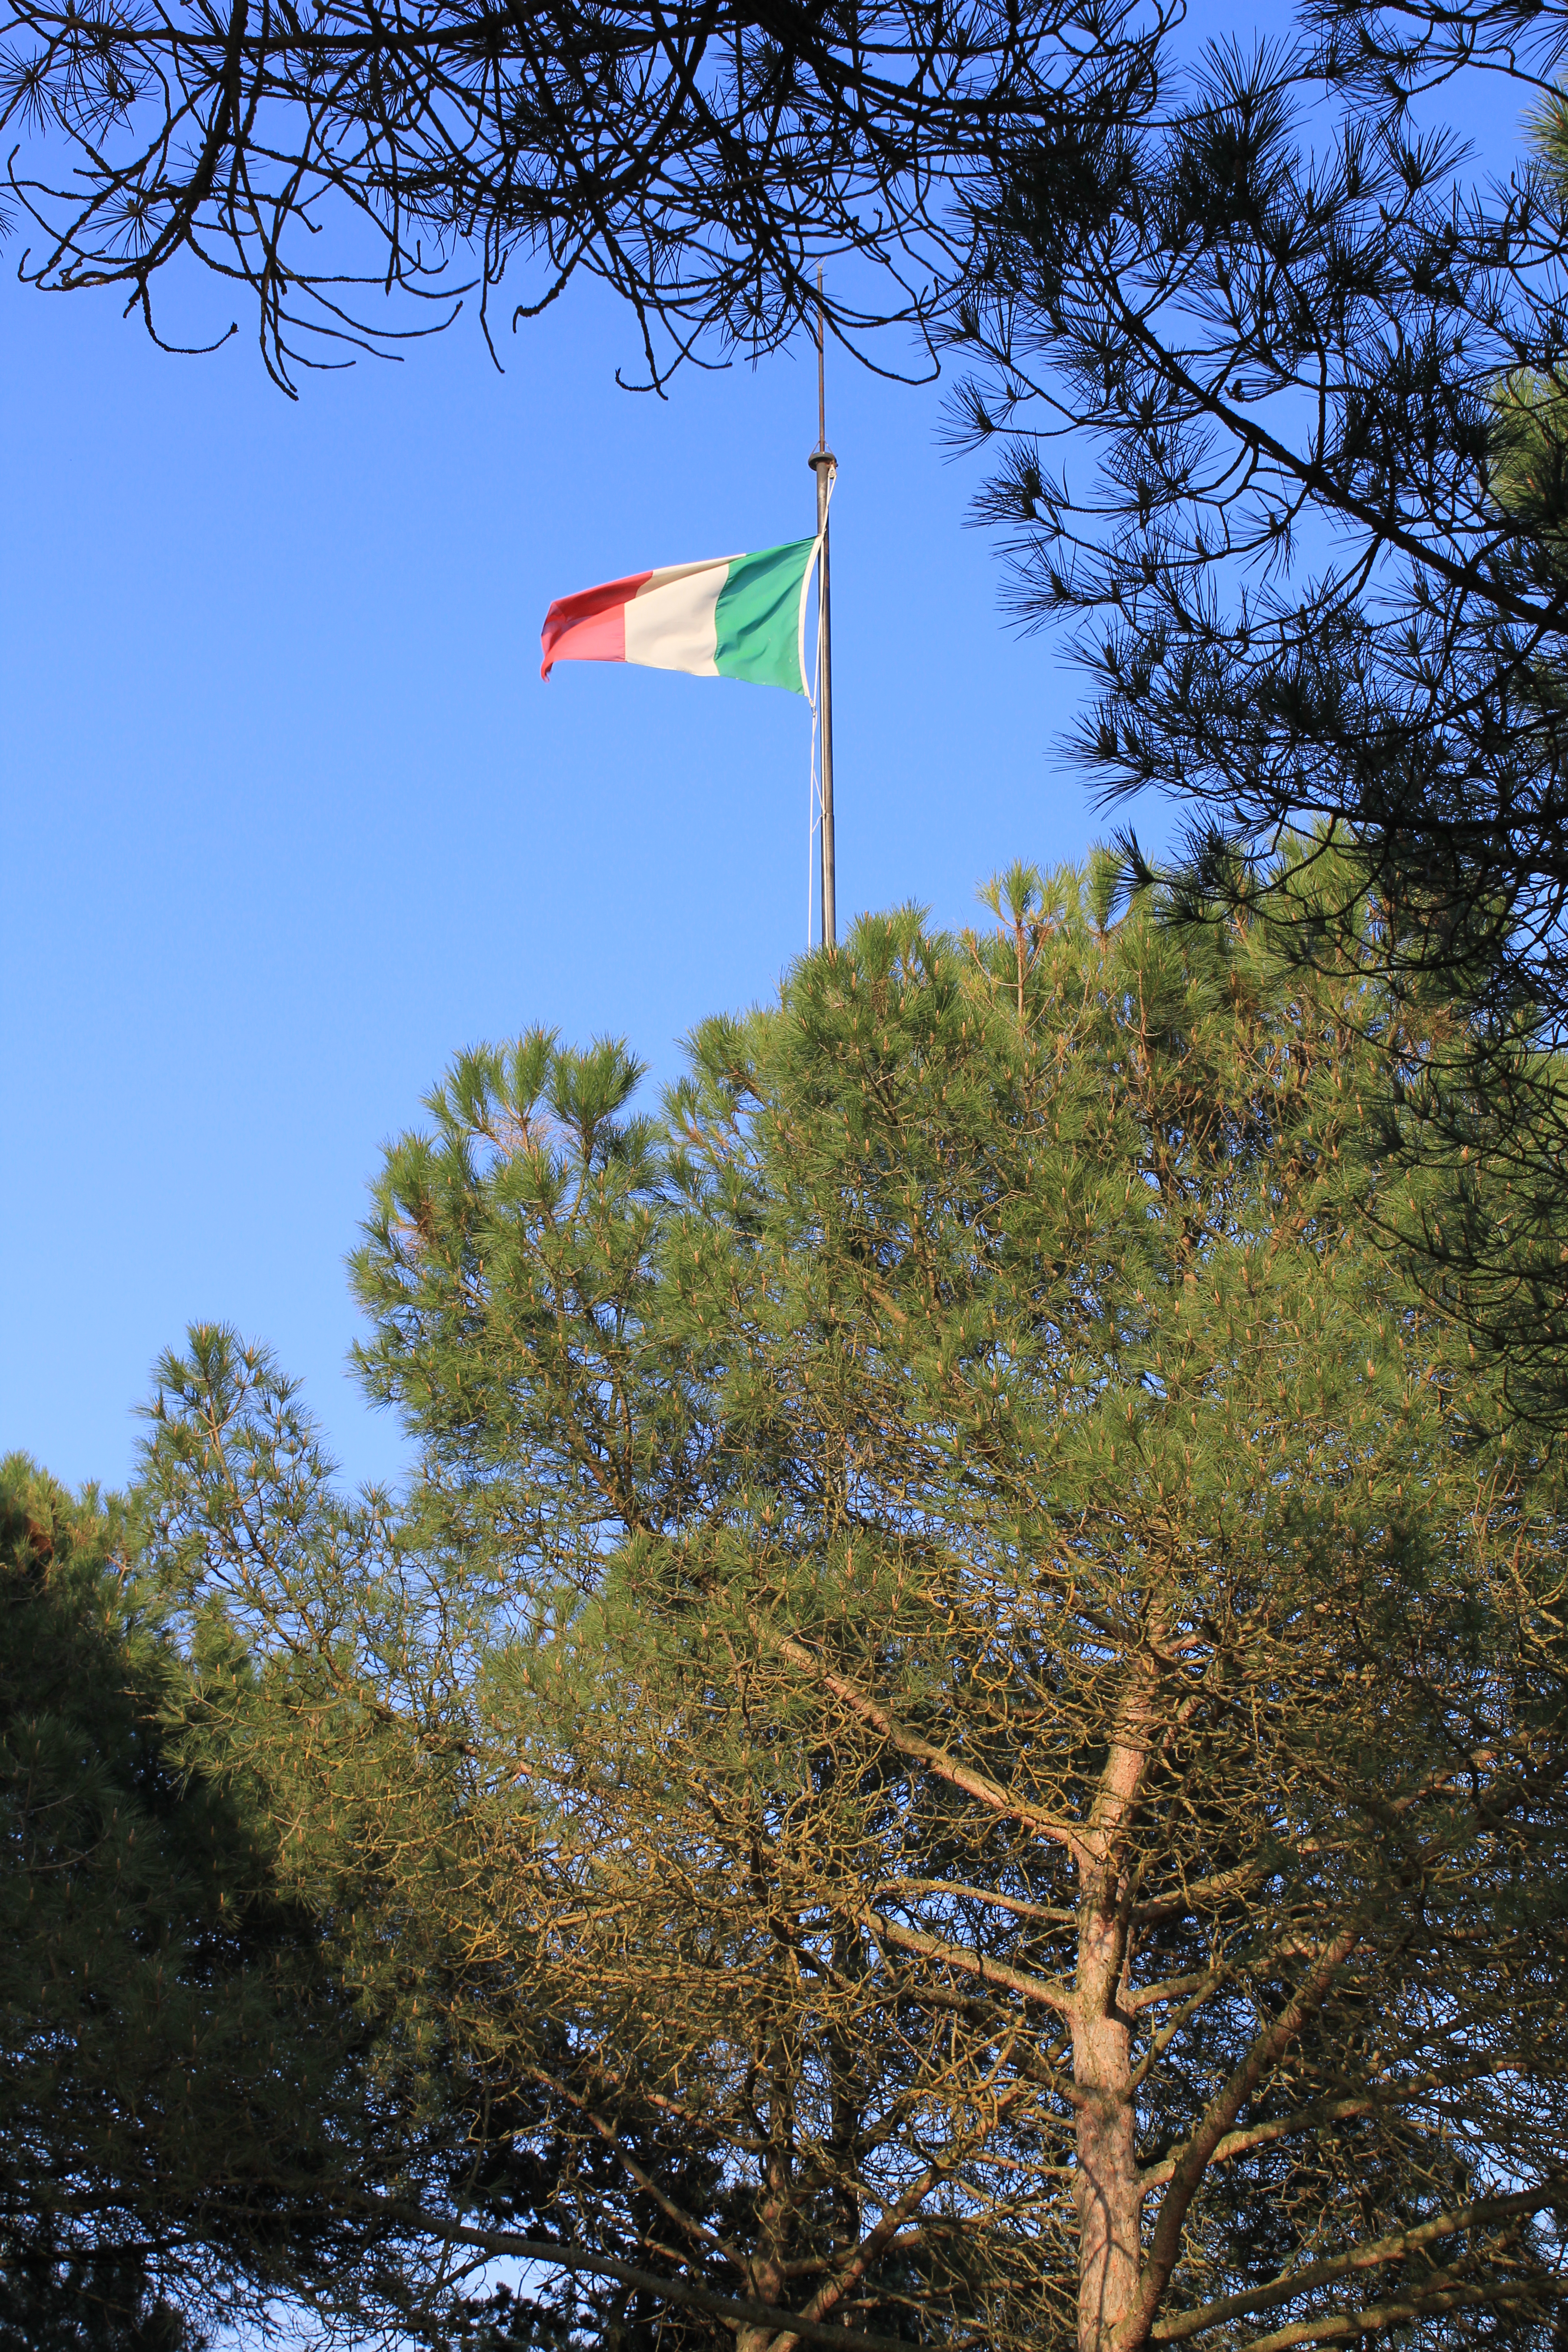 foto: https://upload.wikimedia.org/wikipedia/commons/c/c3/Capanno_Garibaldi_-_bandiera_italiana.jpg